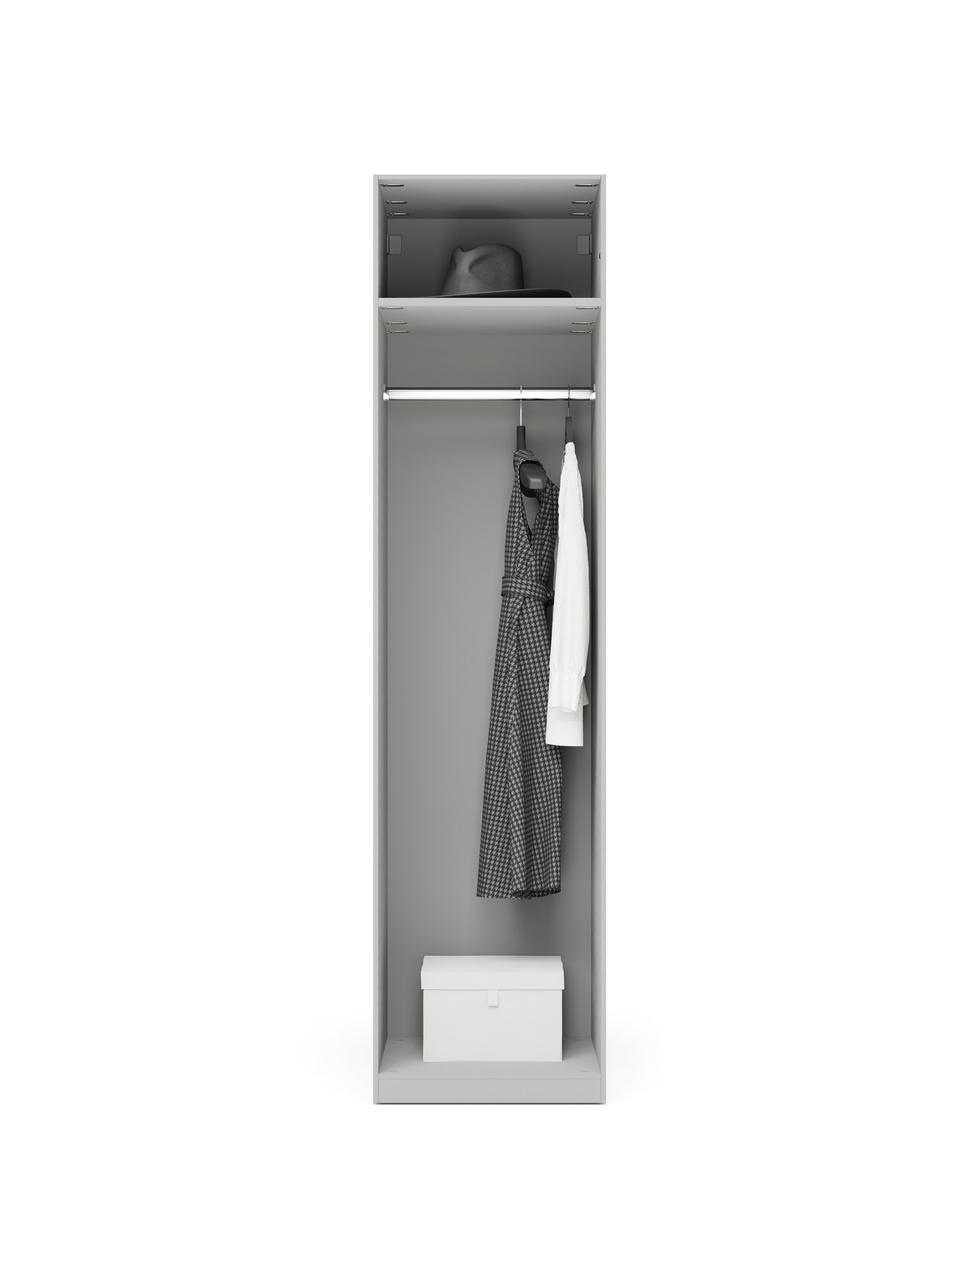 Modulární skříň s otočnými dveřmi Simone, šířka 50 cm, různé varianty, Dřevo, šedá, Interiér Basic, výška 200 cm